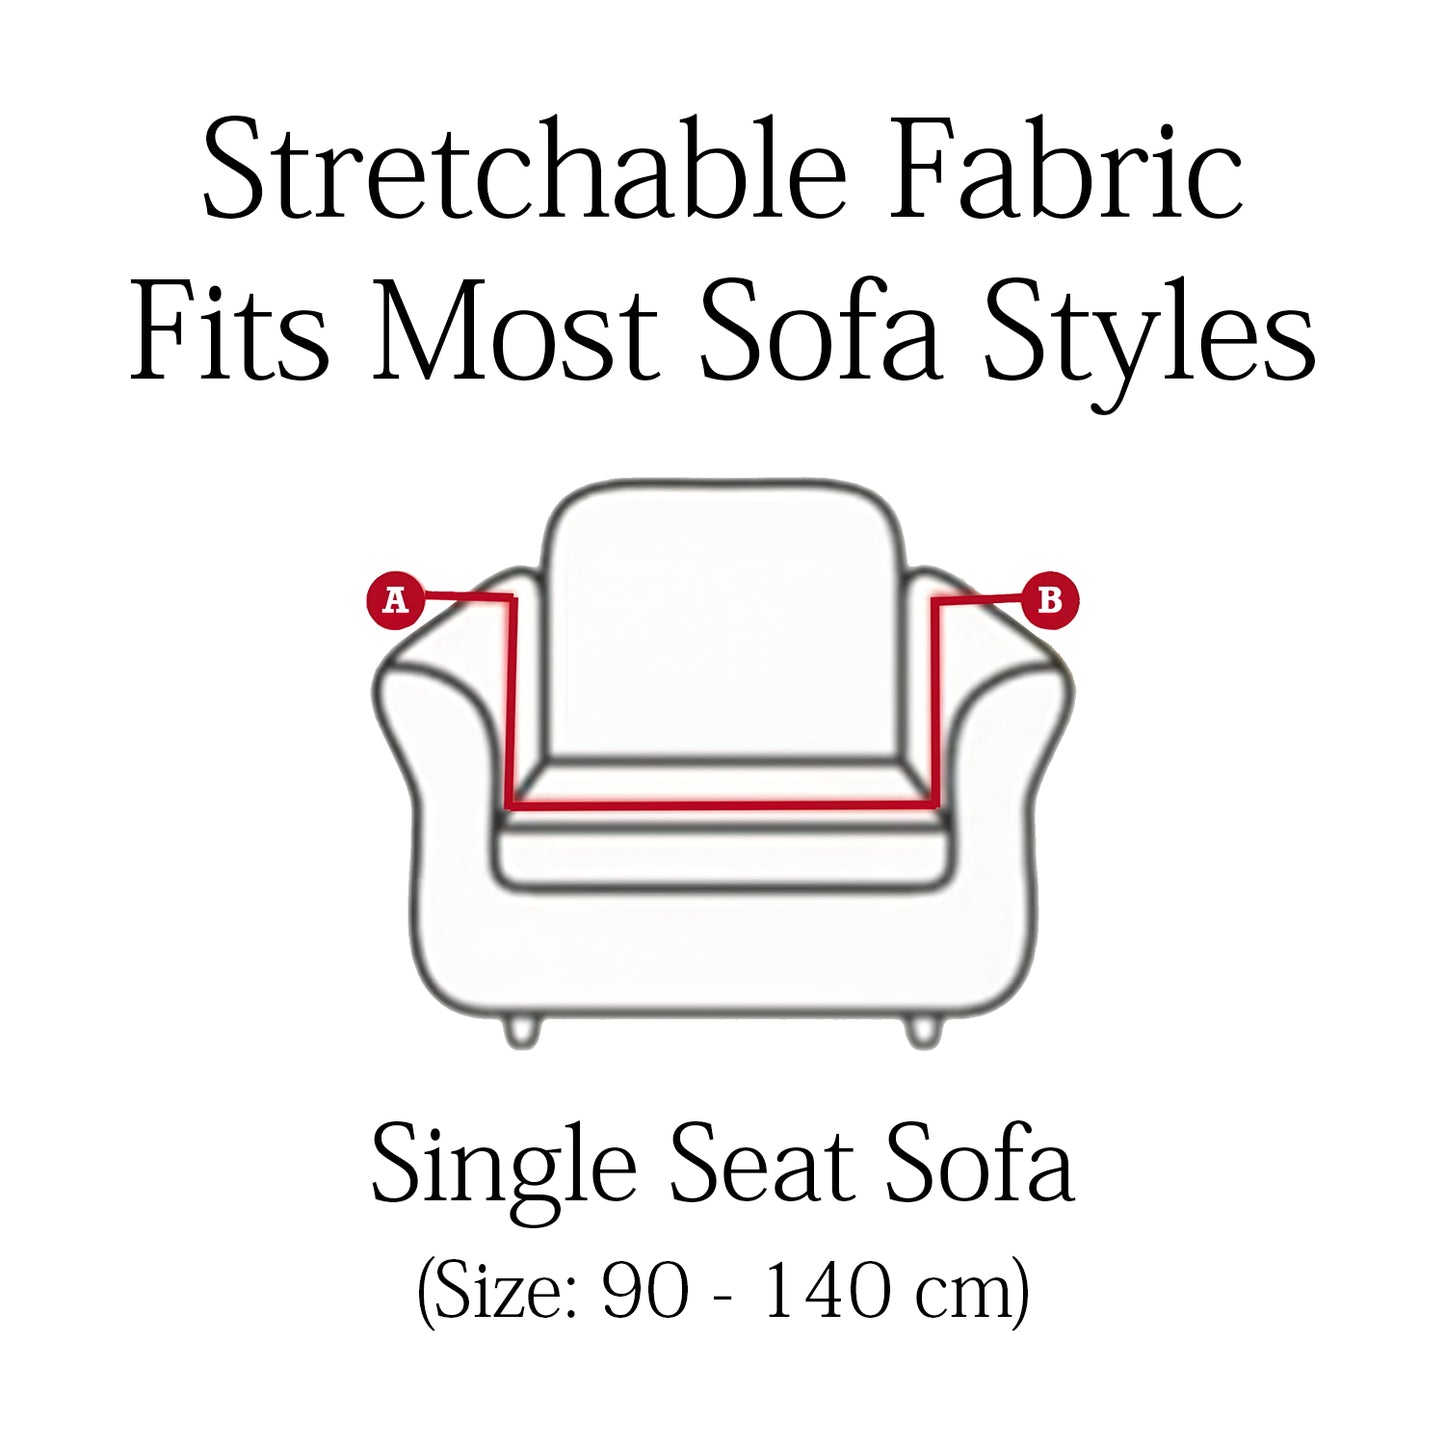 Elastic Floral Printed Sofa Cover 1 Seater-Teal